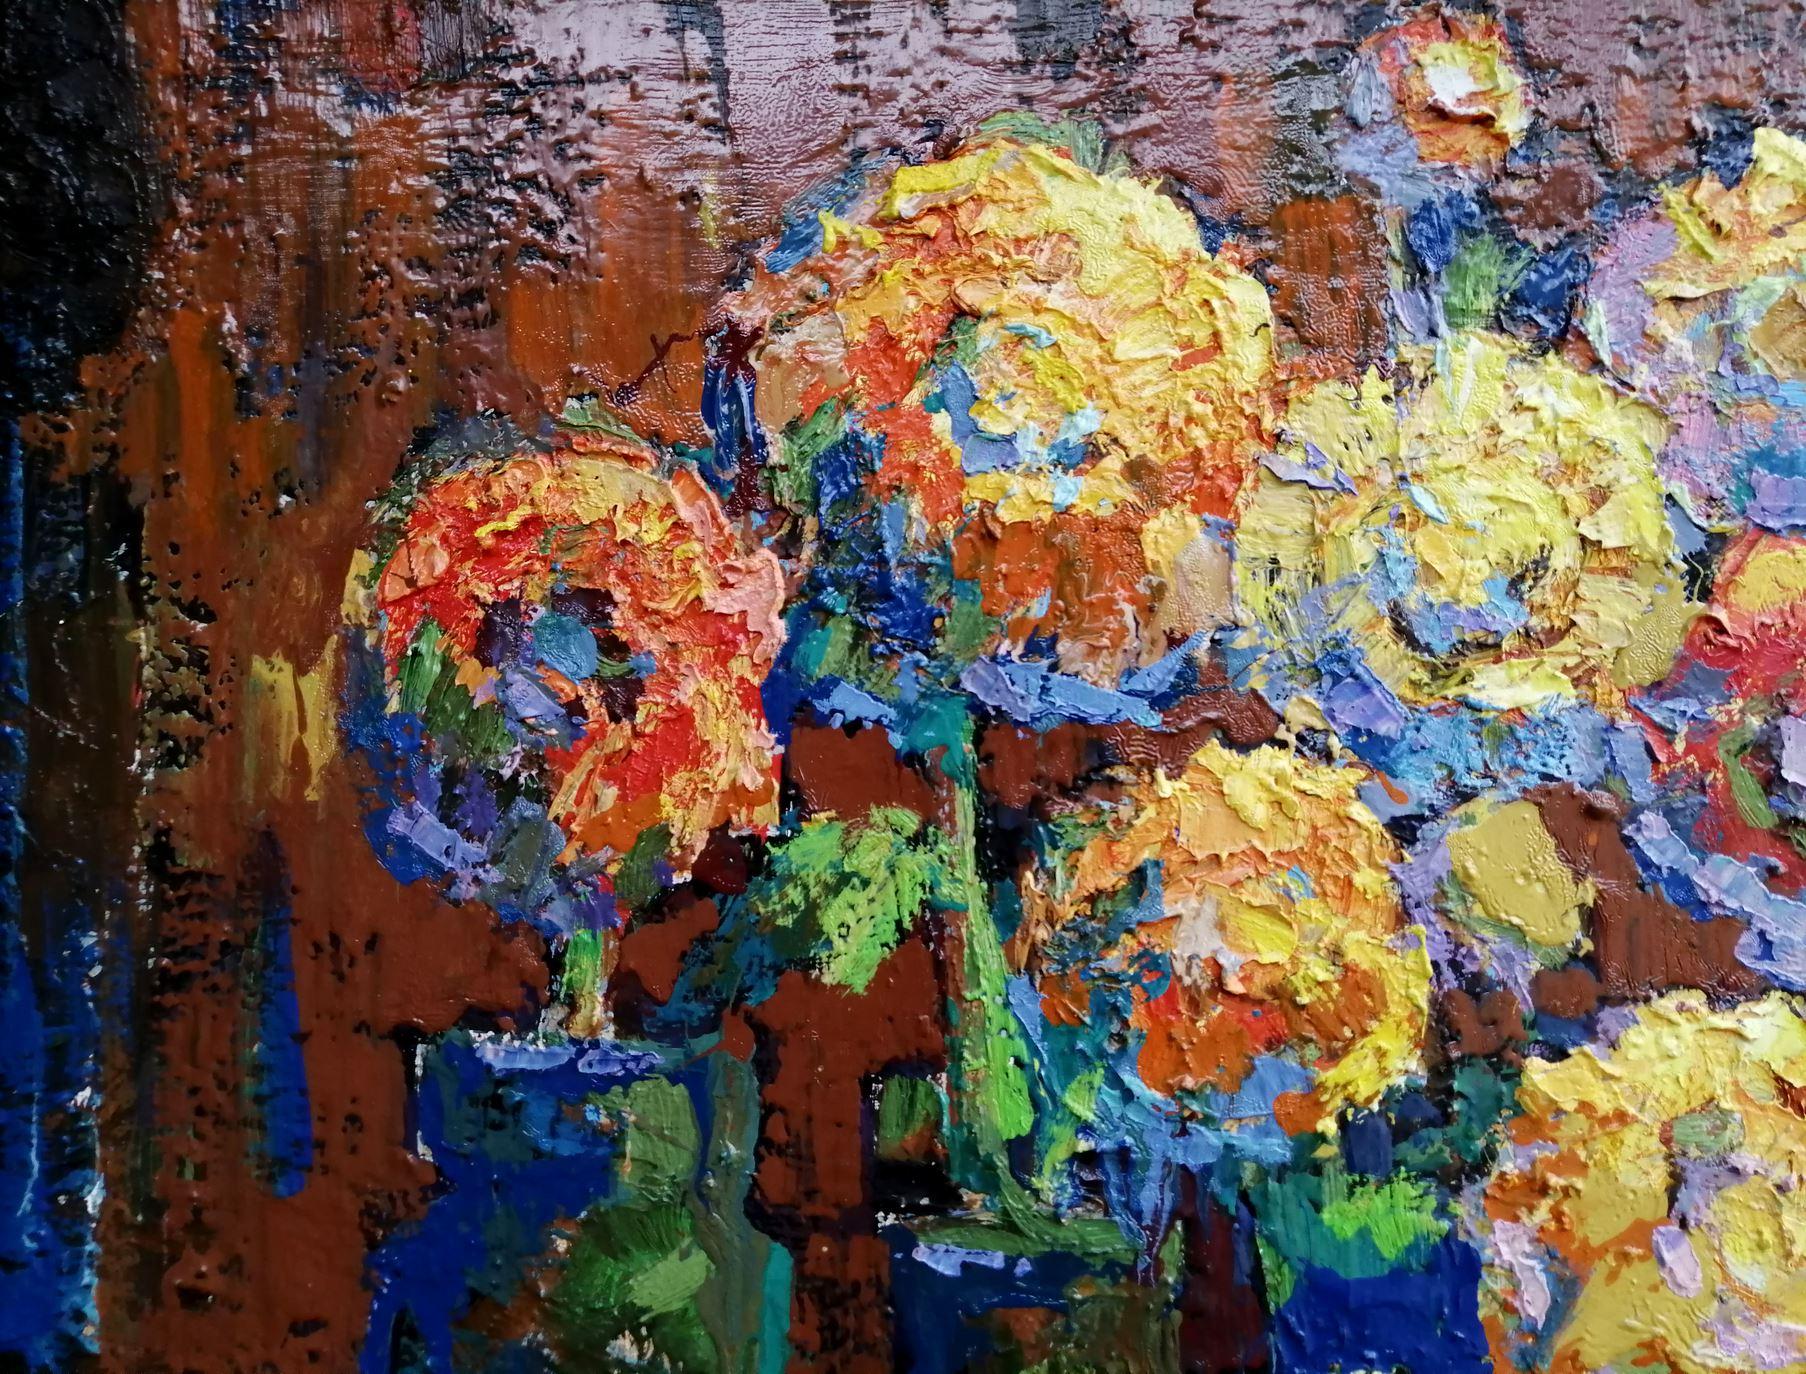 Artist: Oksana Kalenyuk 
Work: Original oil painting, handmade artwork, one of a kind 
Medium: Oil on canvas 
Year: 2019
Style: Impressionism
Title: Flowers on the Table, 
Size: 23.5